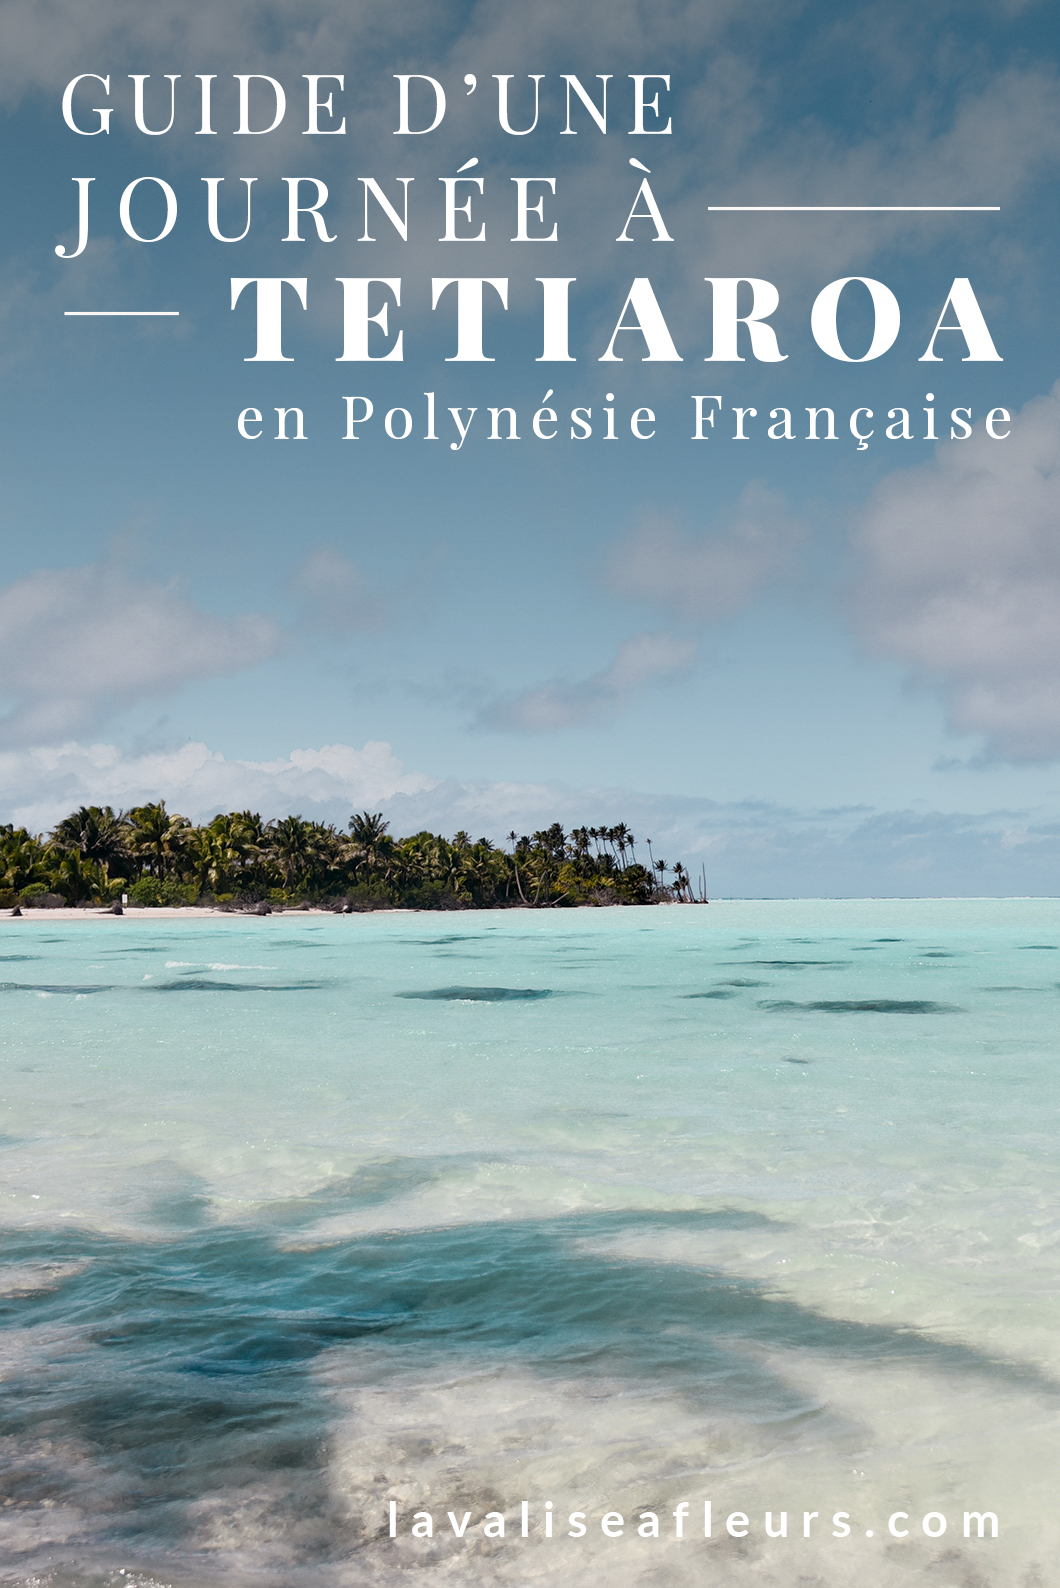 Guide d'une journée à Tetiaroa en Polynésie Française